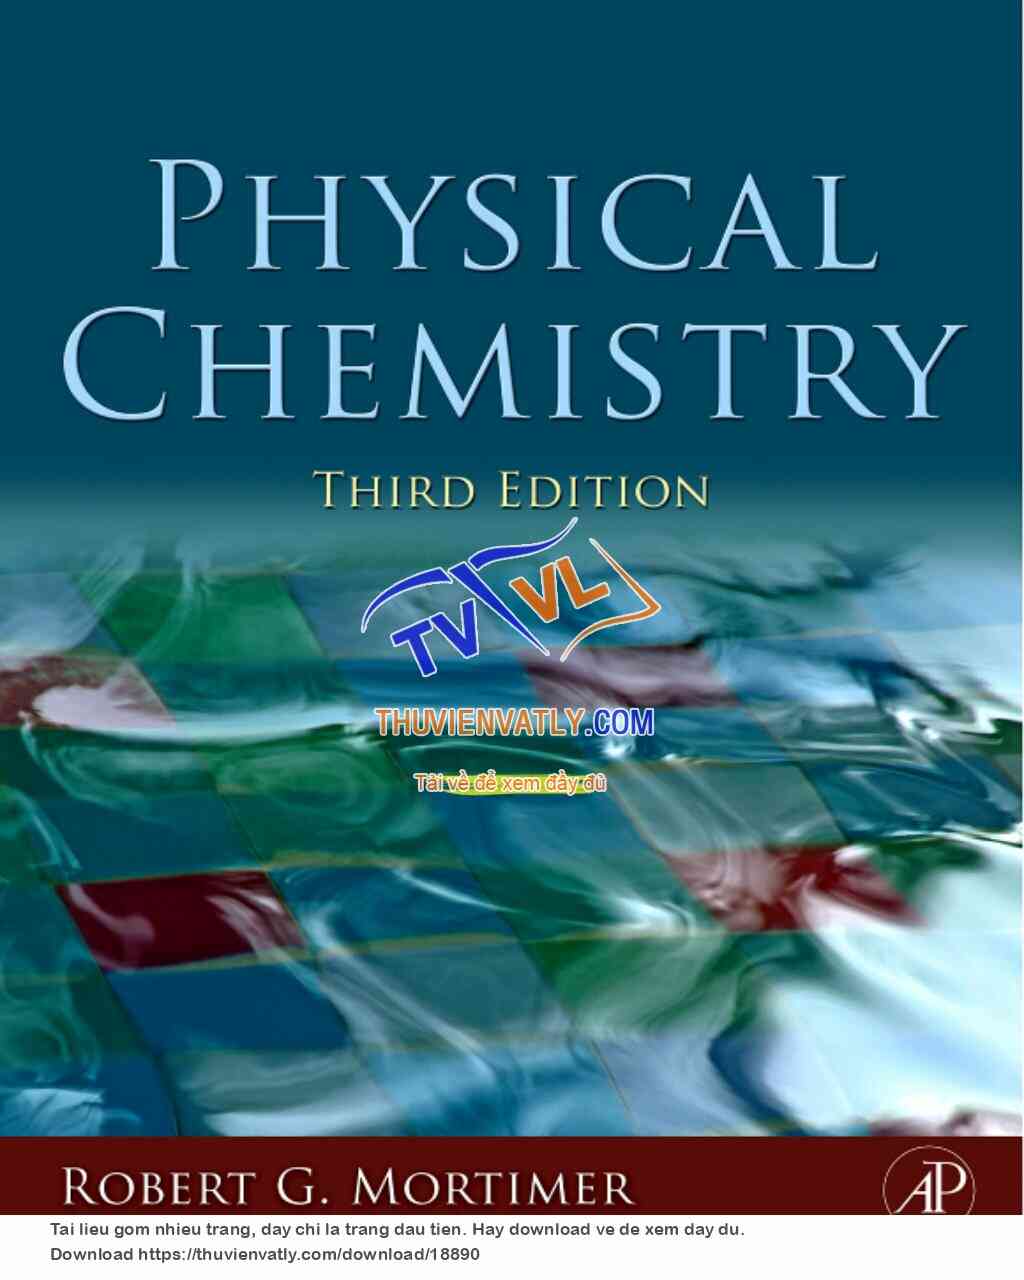 Physical Chemistry, Third Edition (Robert G.Mortimer, Elsevier  2008)